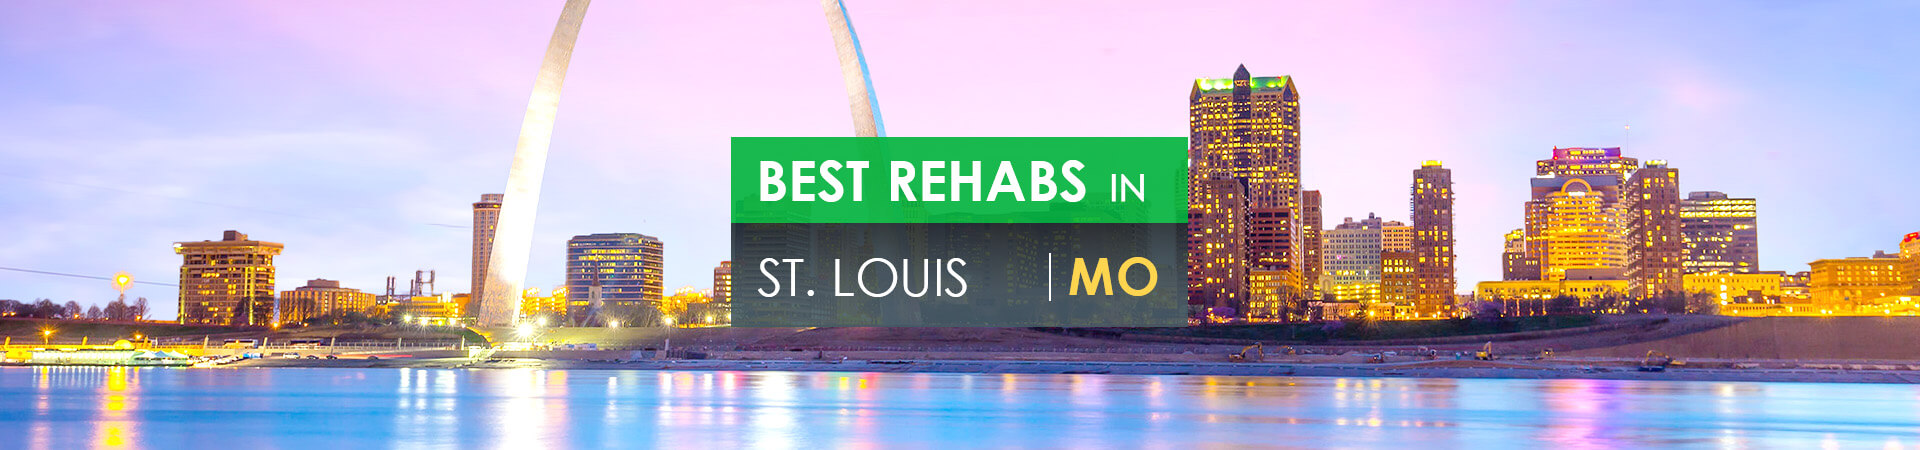 Best rehabs in St. Louis, MO